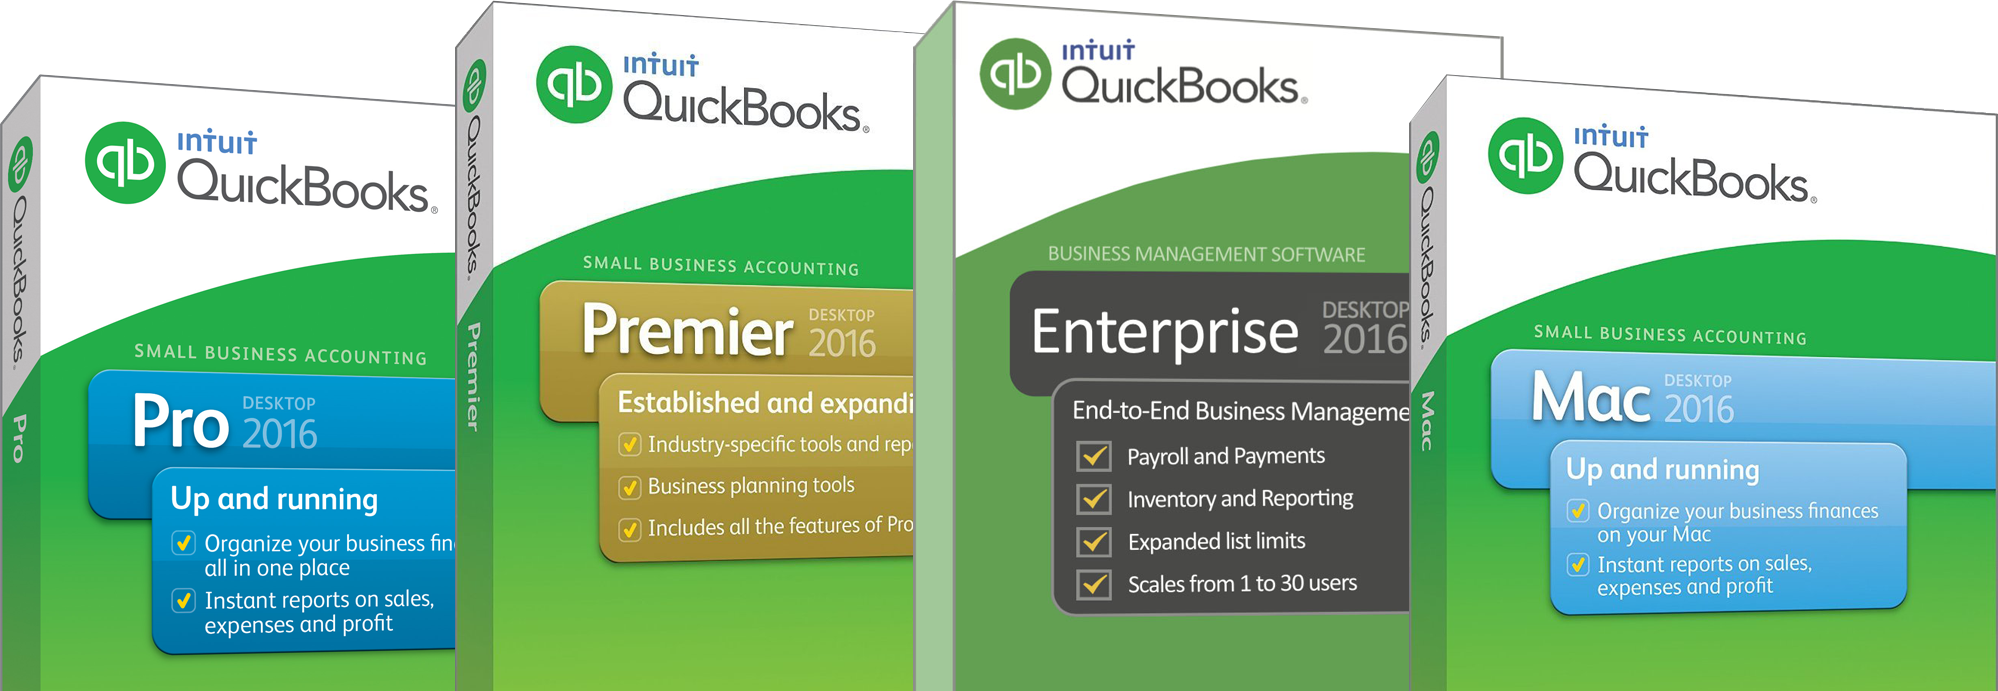 quickbooks for mac 2016 trial version